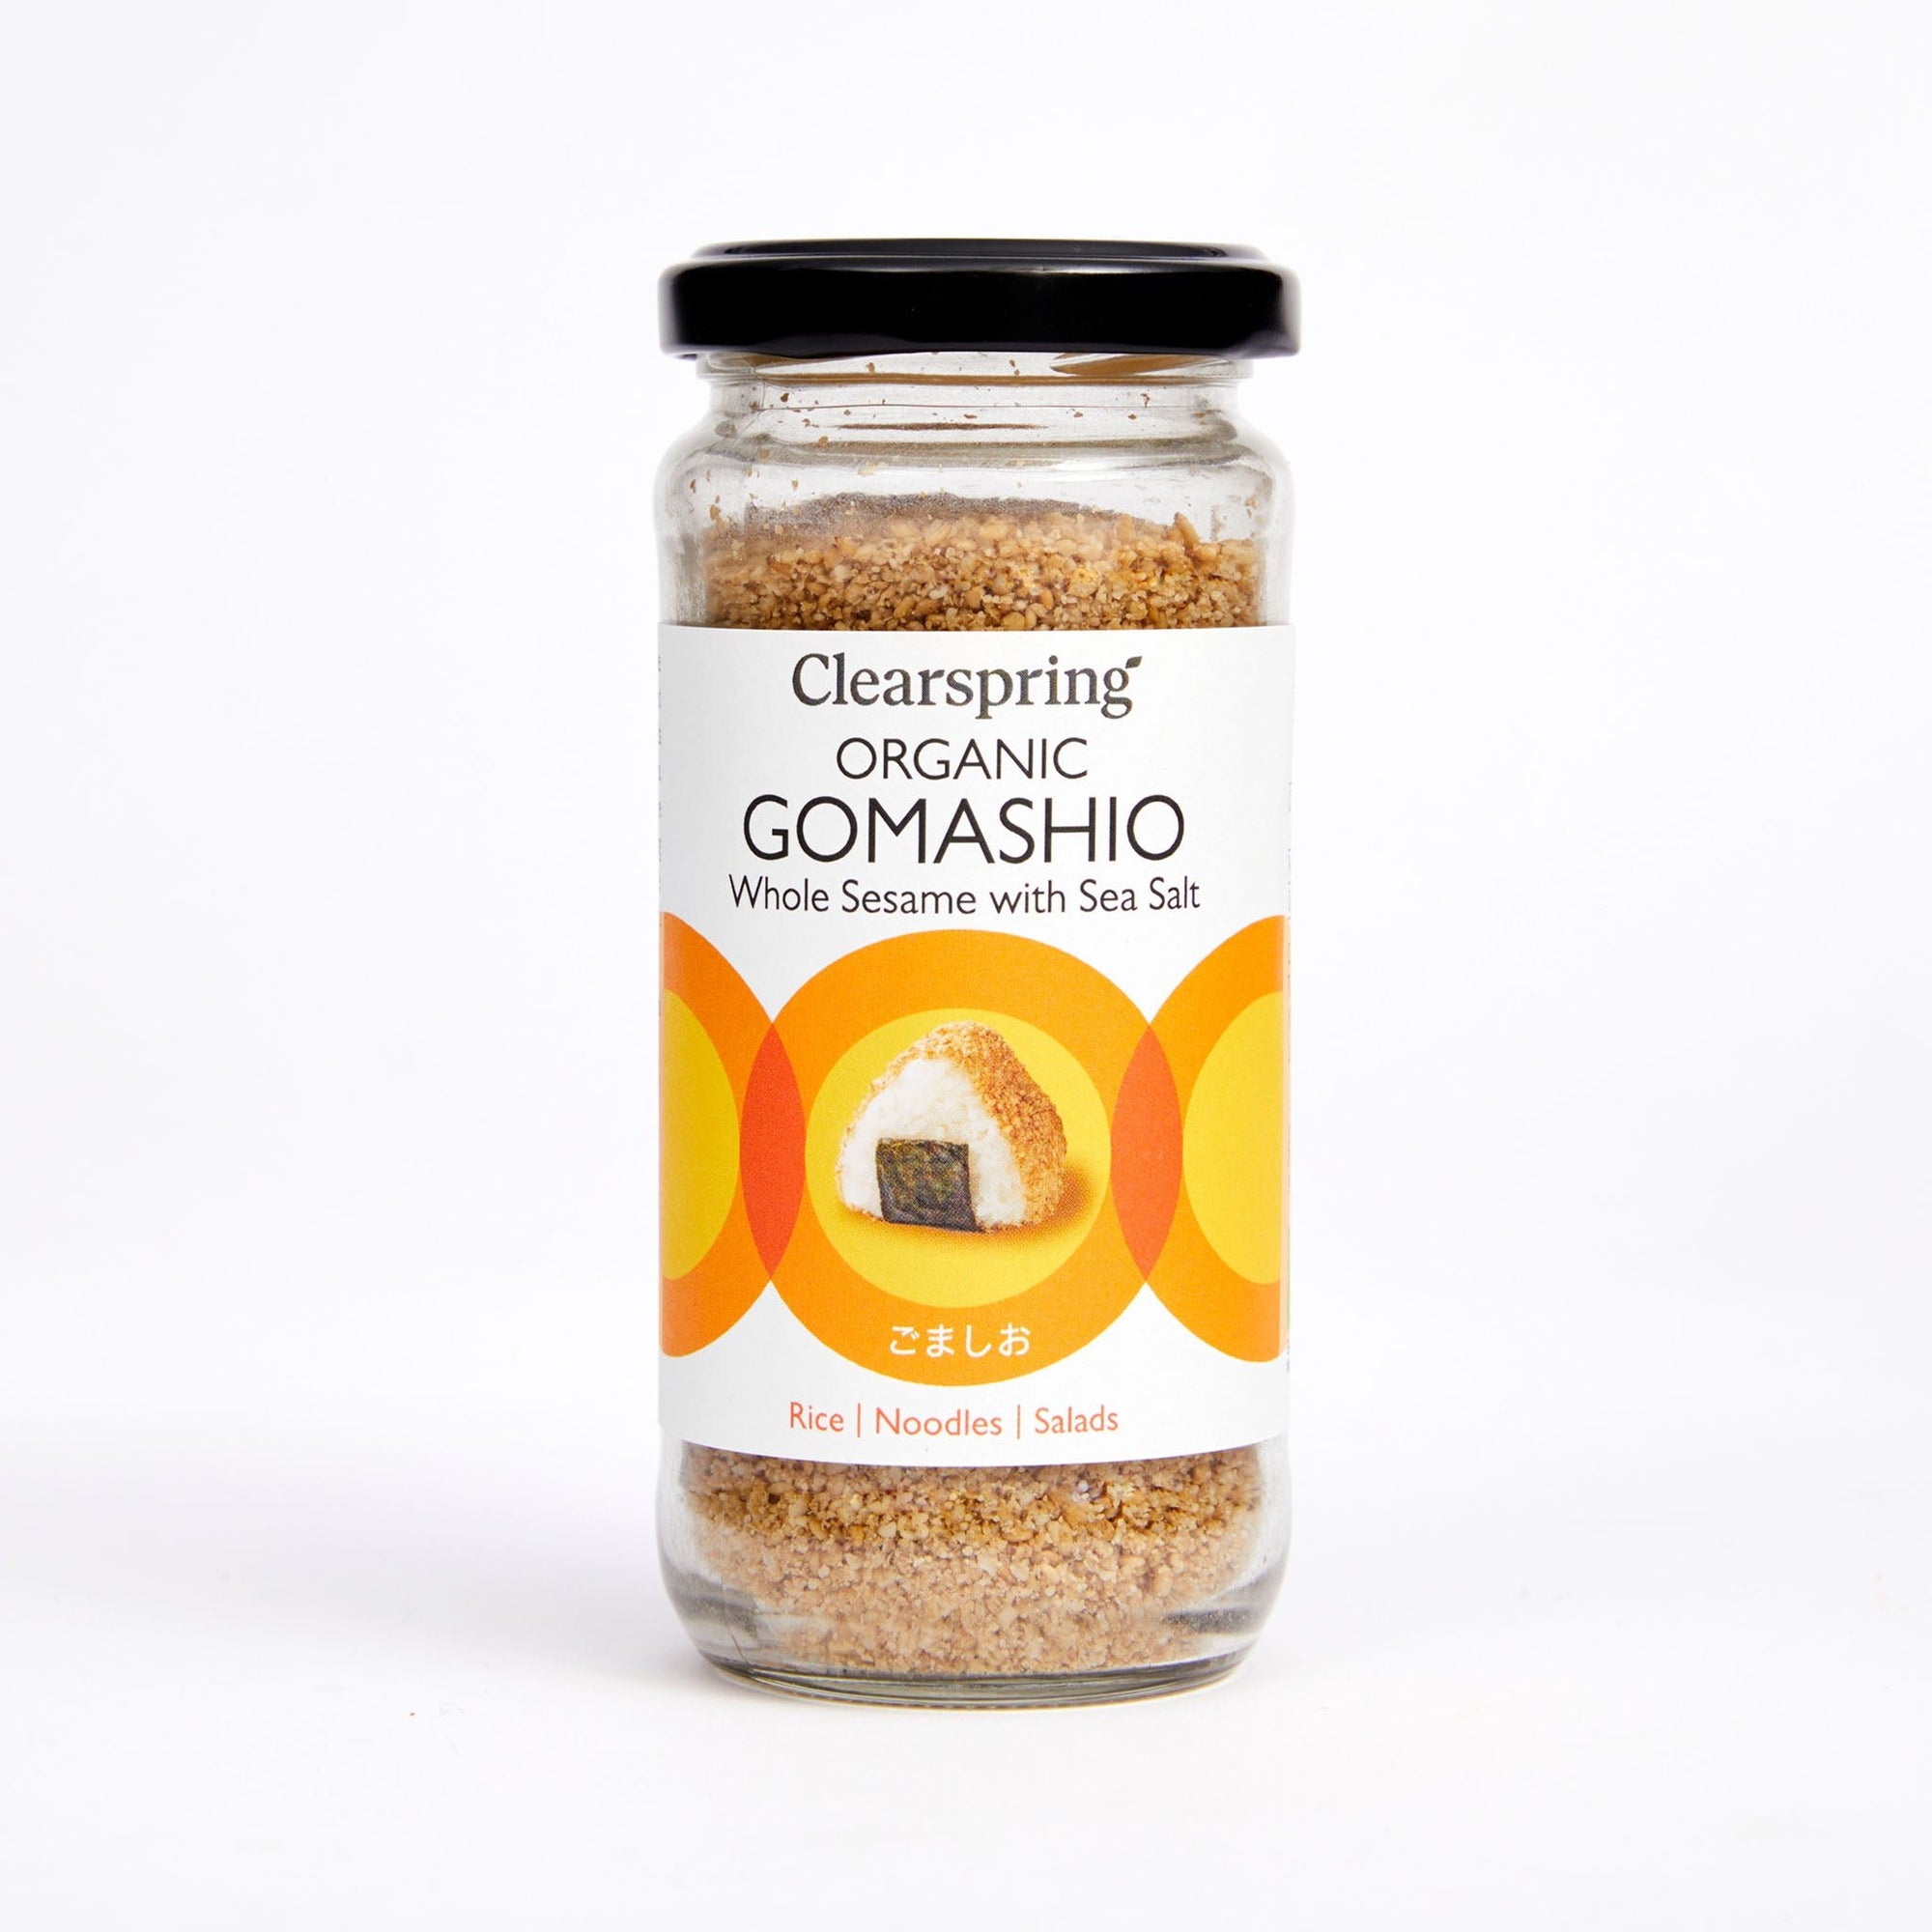 Clearspring Organic Gomashio - Whole Sesame with Sea Salt